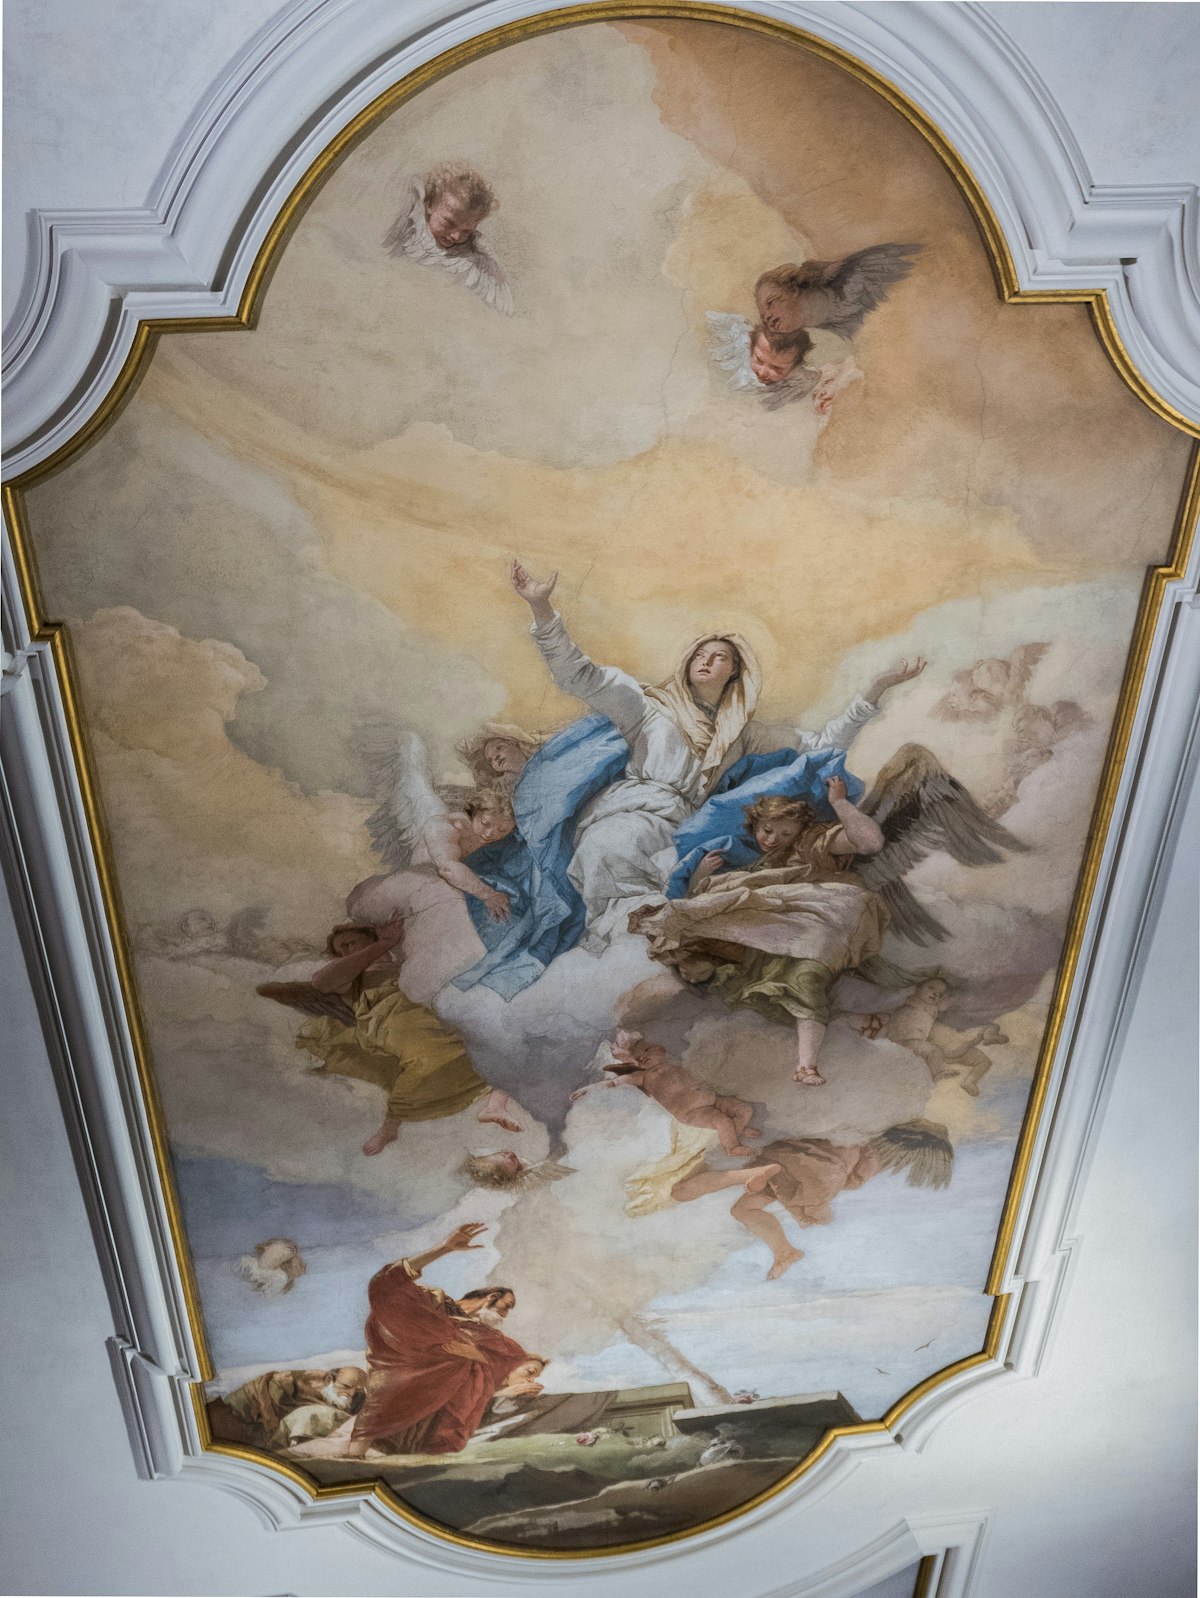 The fresco entitled "Assunta" (Our Lady Assumption) by Giovan Battista Tiepolo on the ceiling of the Oratorio della Purità church.